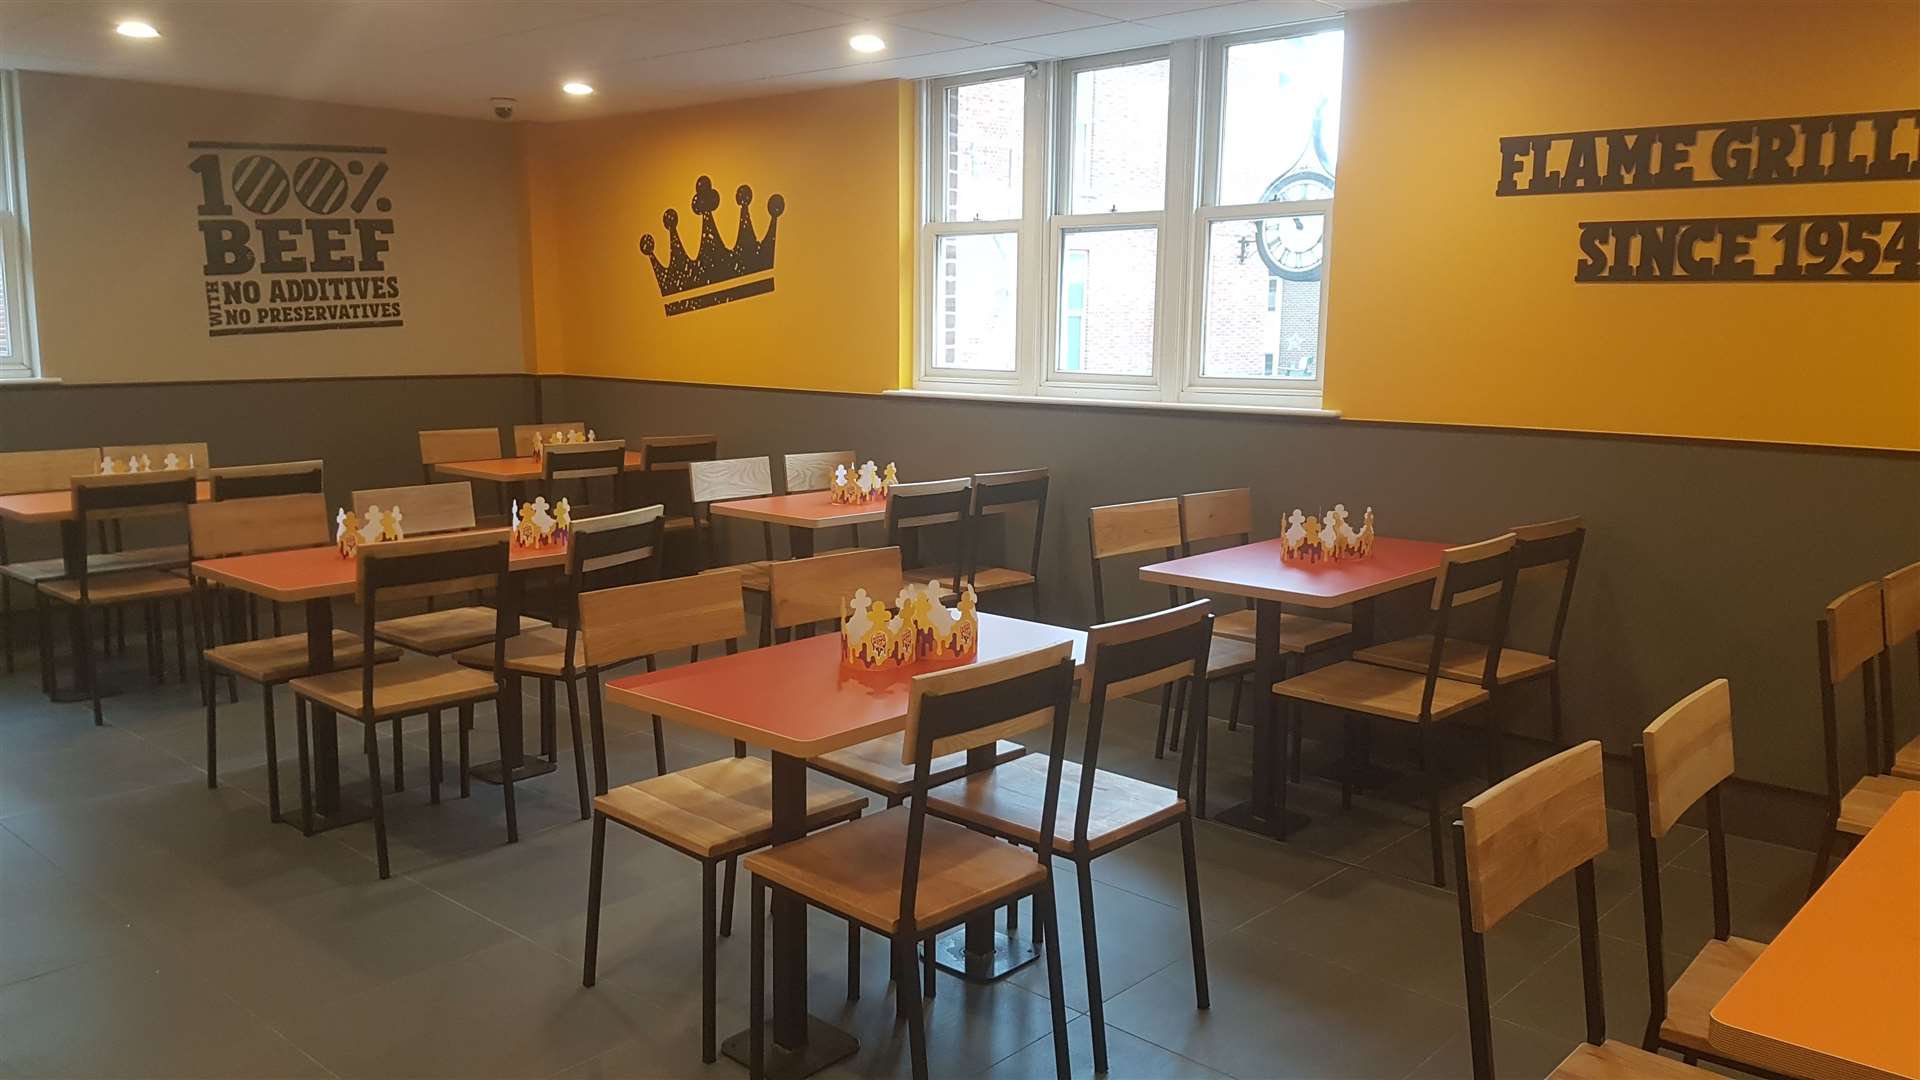 Canterbury Burger King reopens after month-long refurbishment